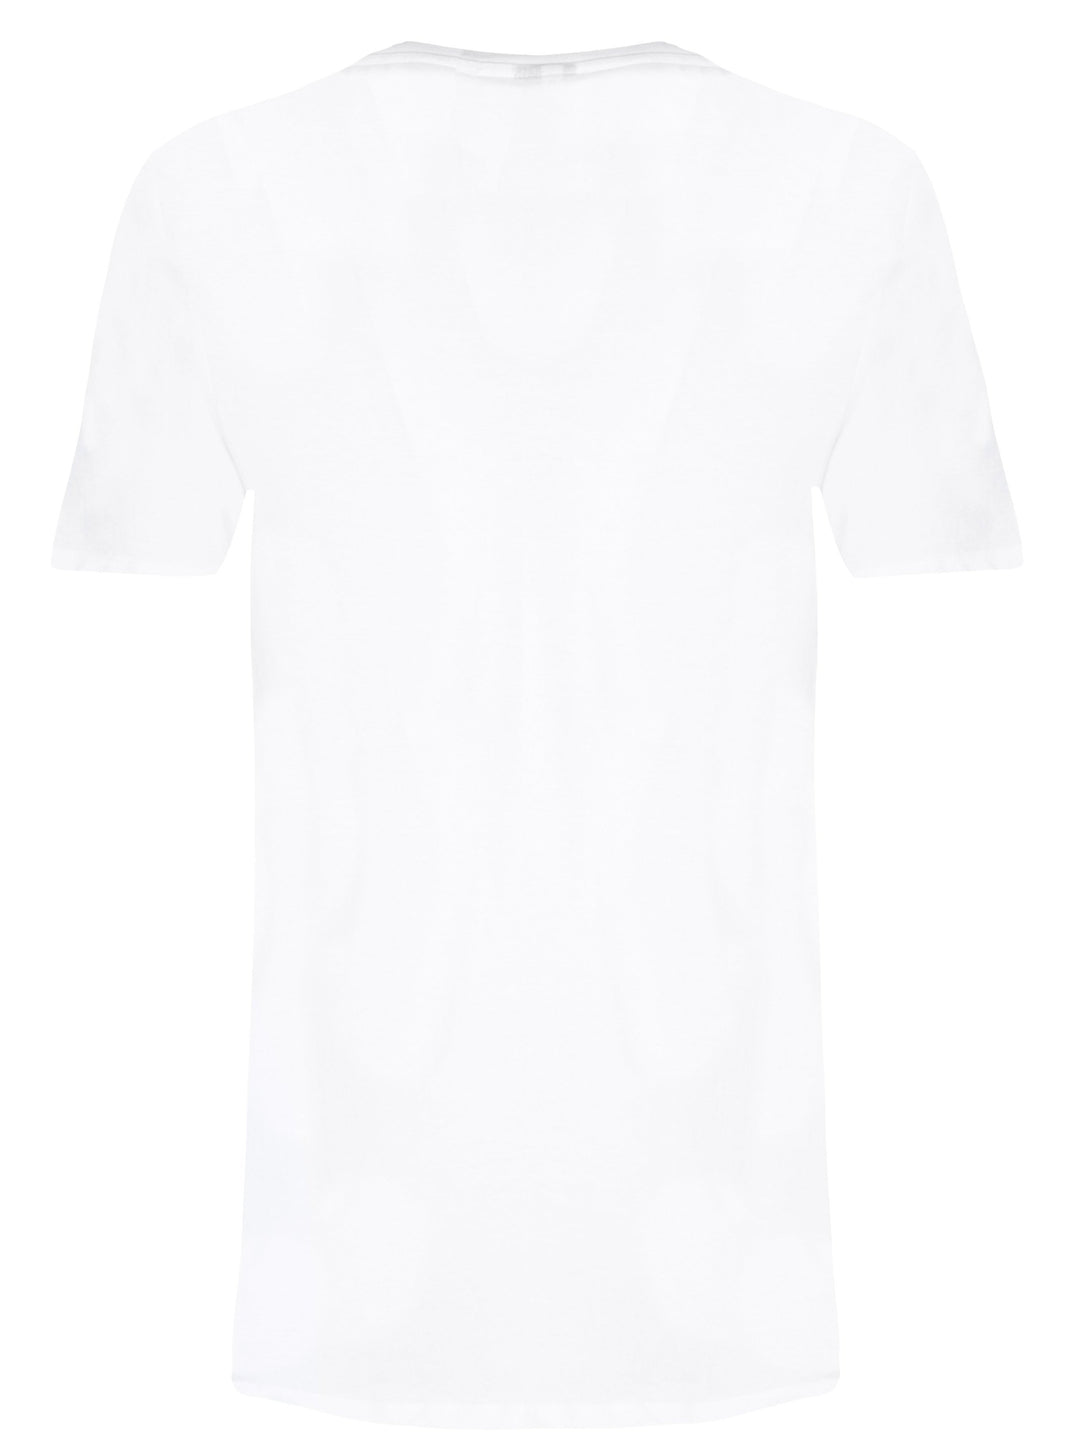 BX Long Line T-shirt - White - Adapt Avenue